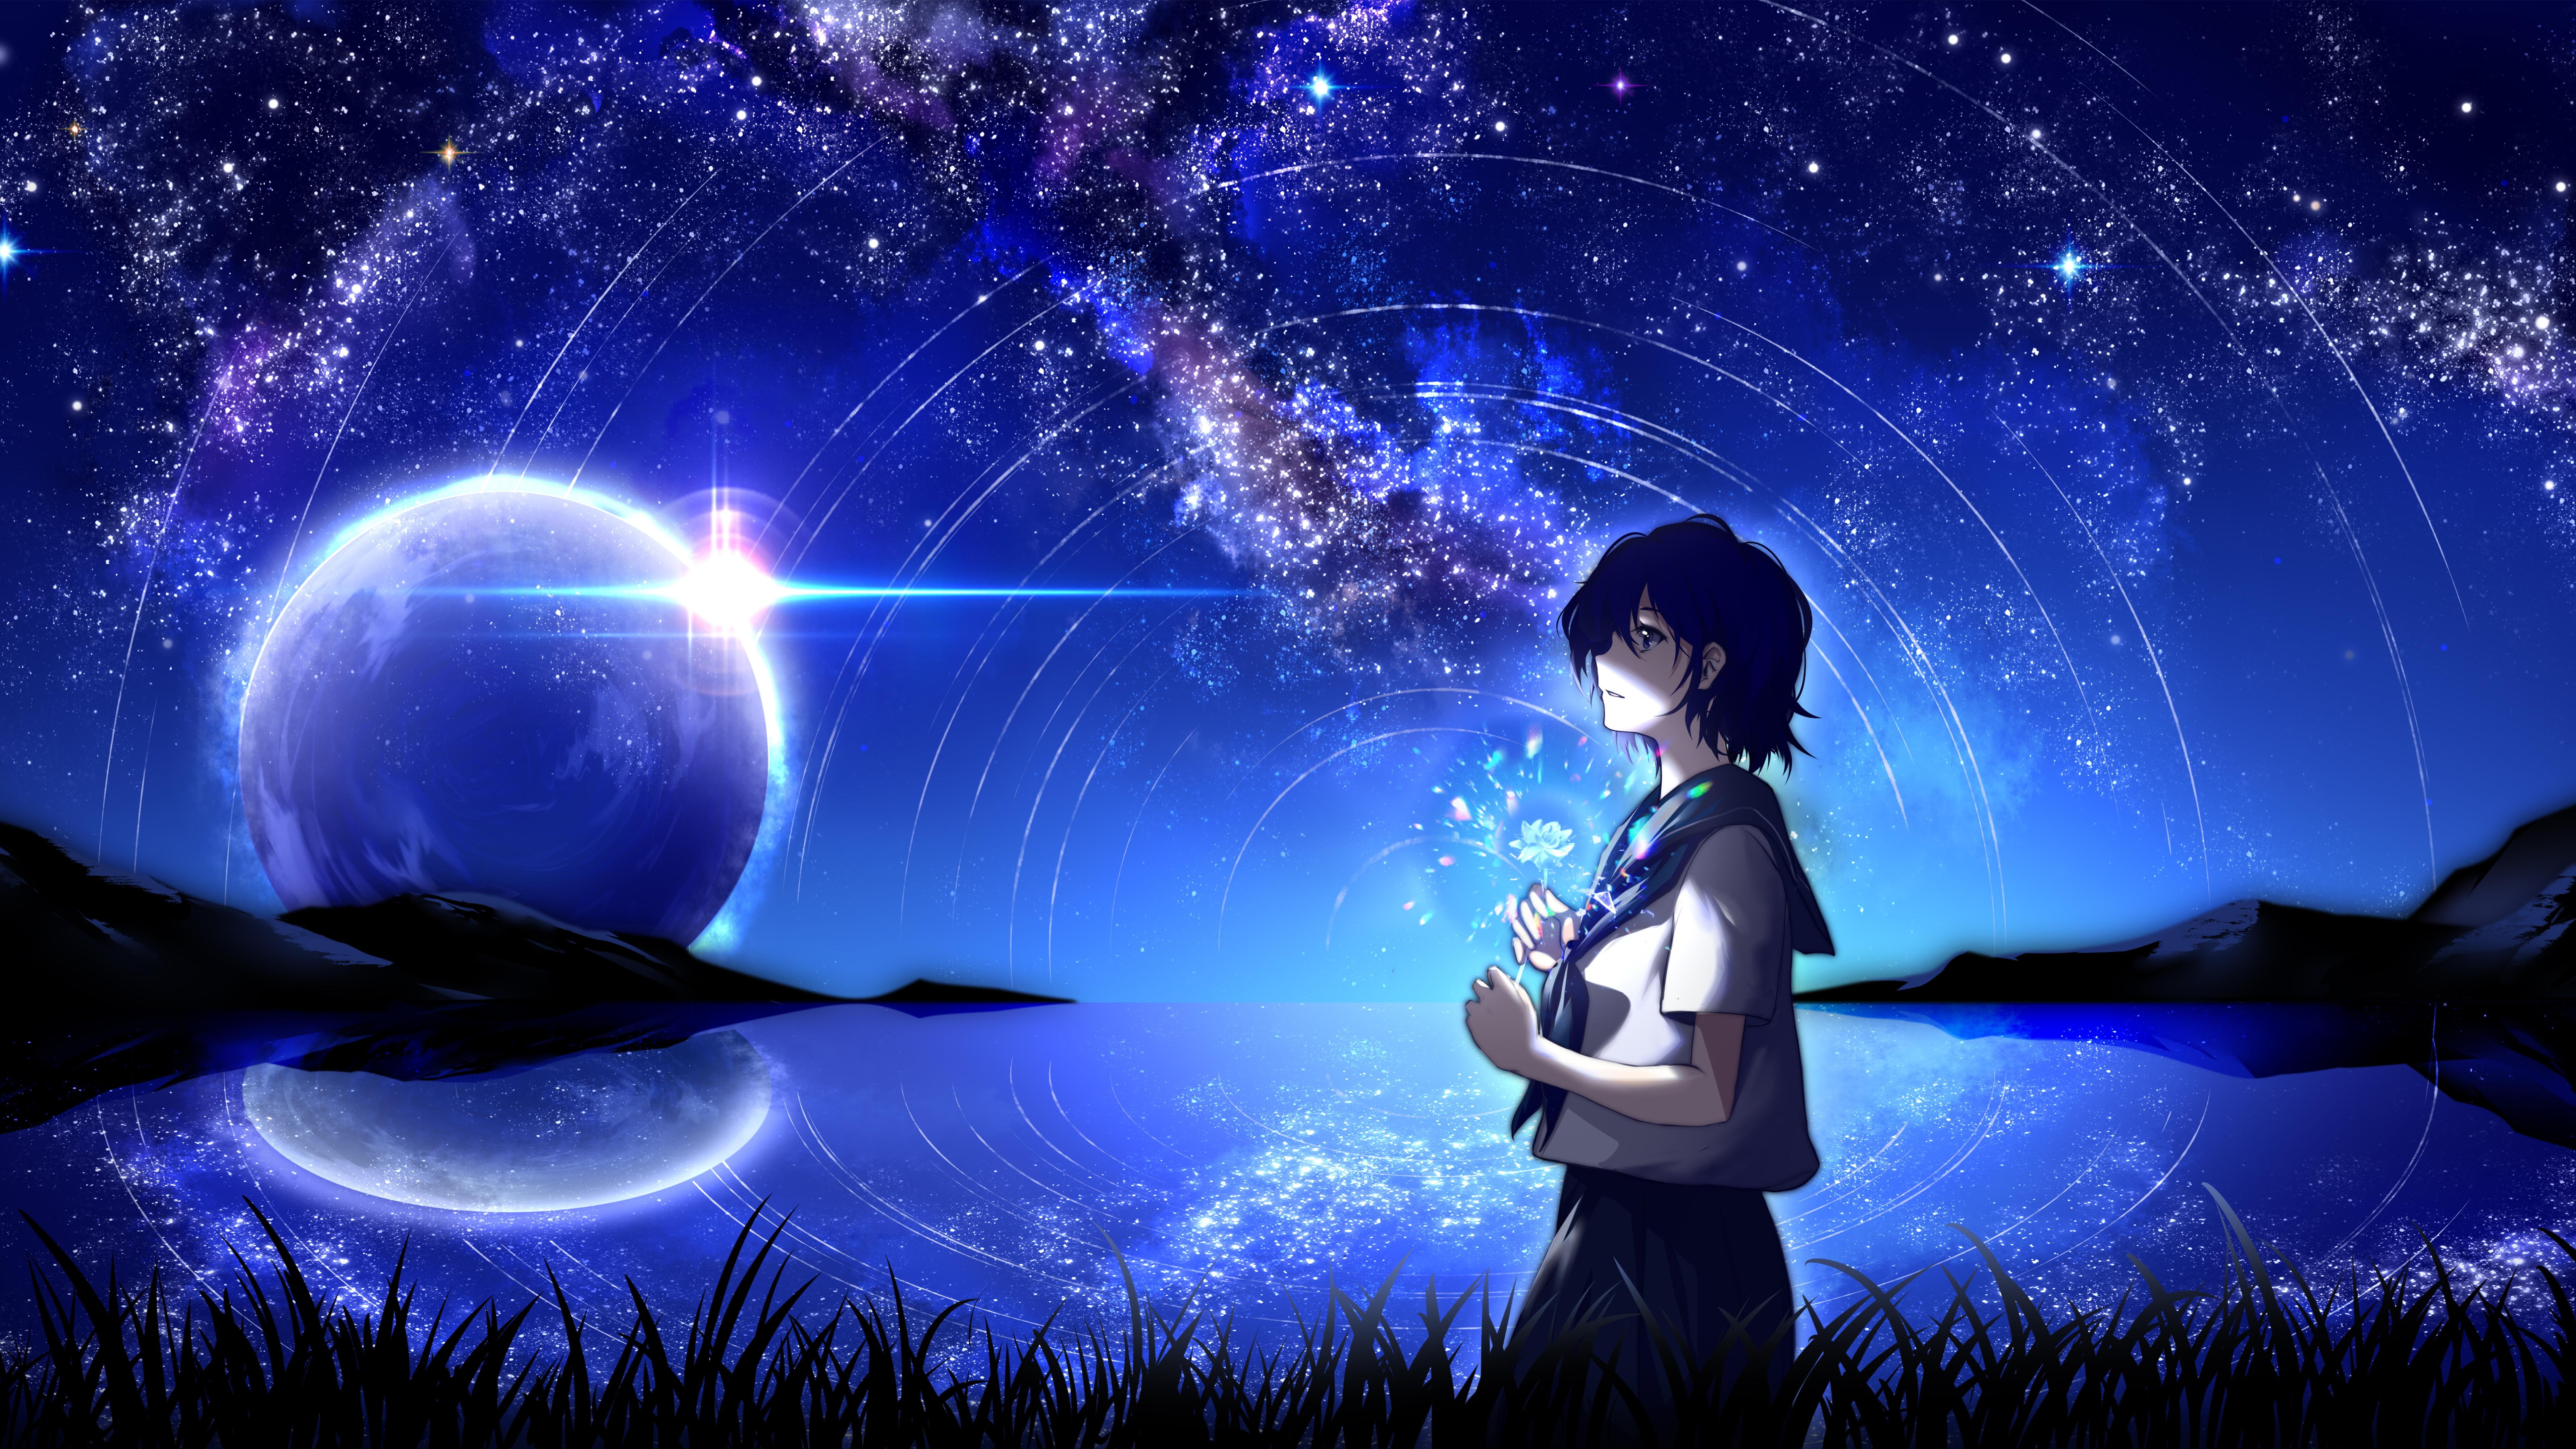 8k Anime School Girl Night Moon Lake Scenery Wallpaper 2800g